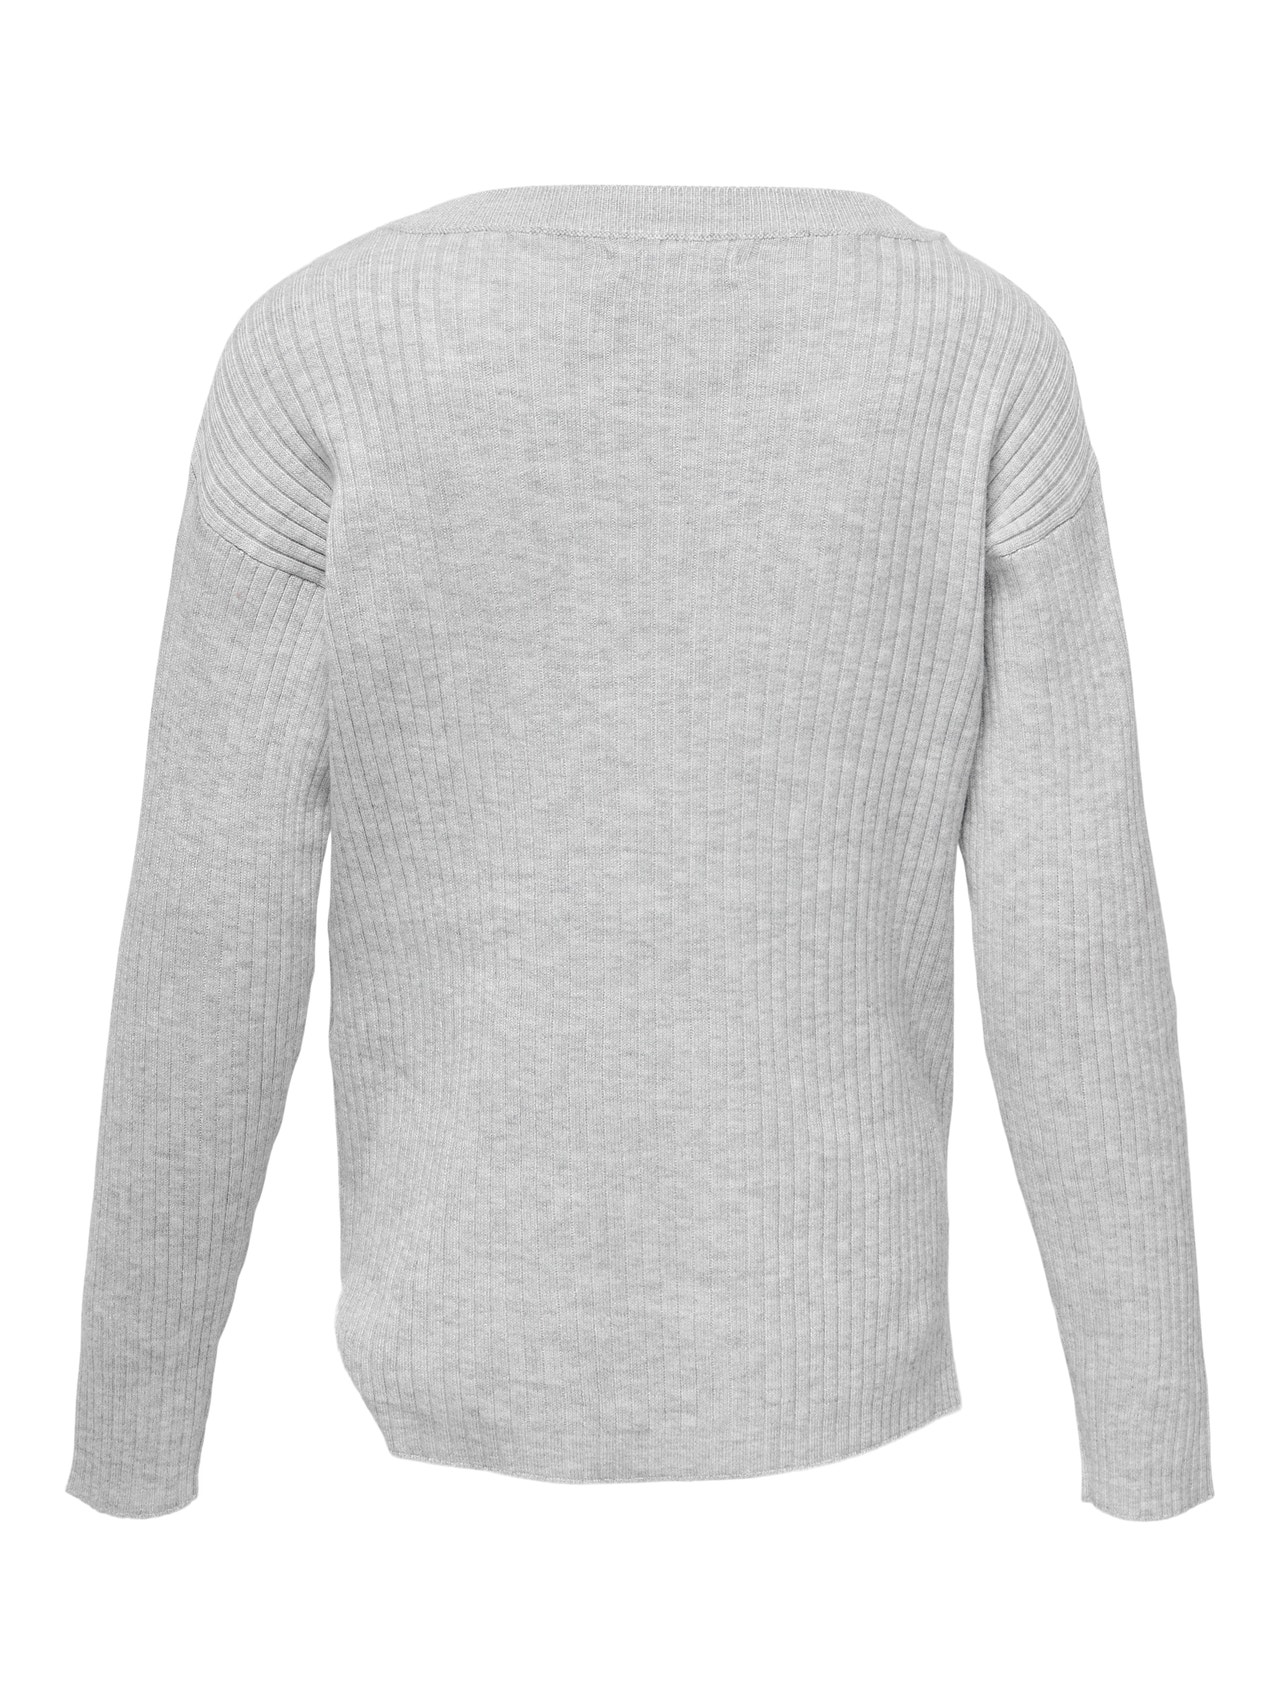 ONLY Unicolor Jersey de punto -Light Grey Melange - 15263490